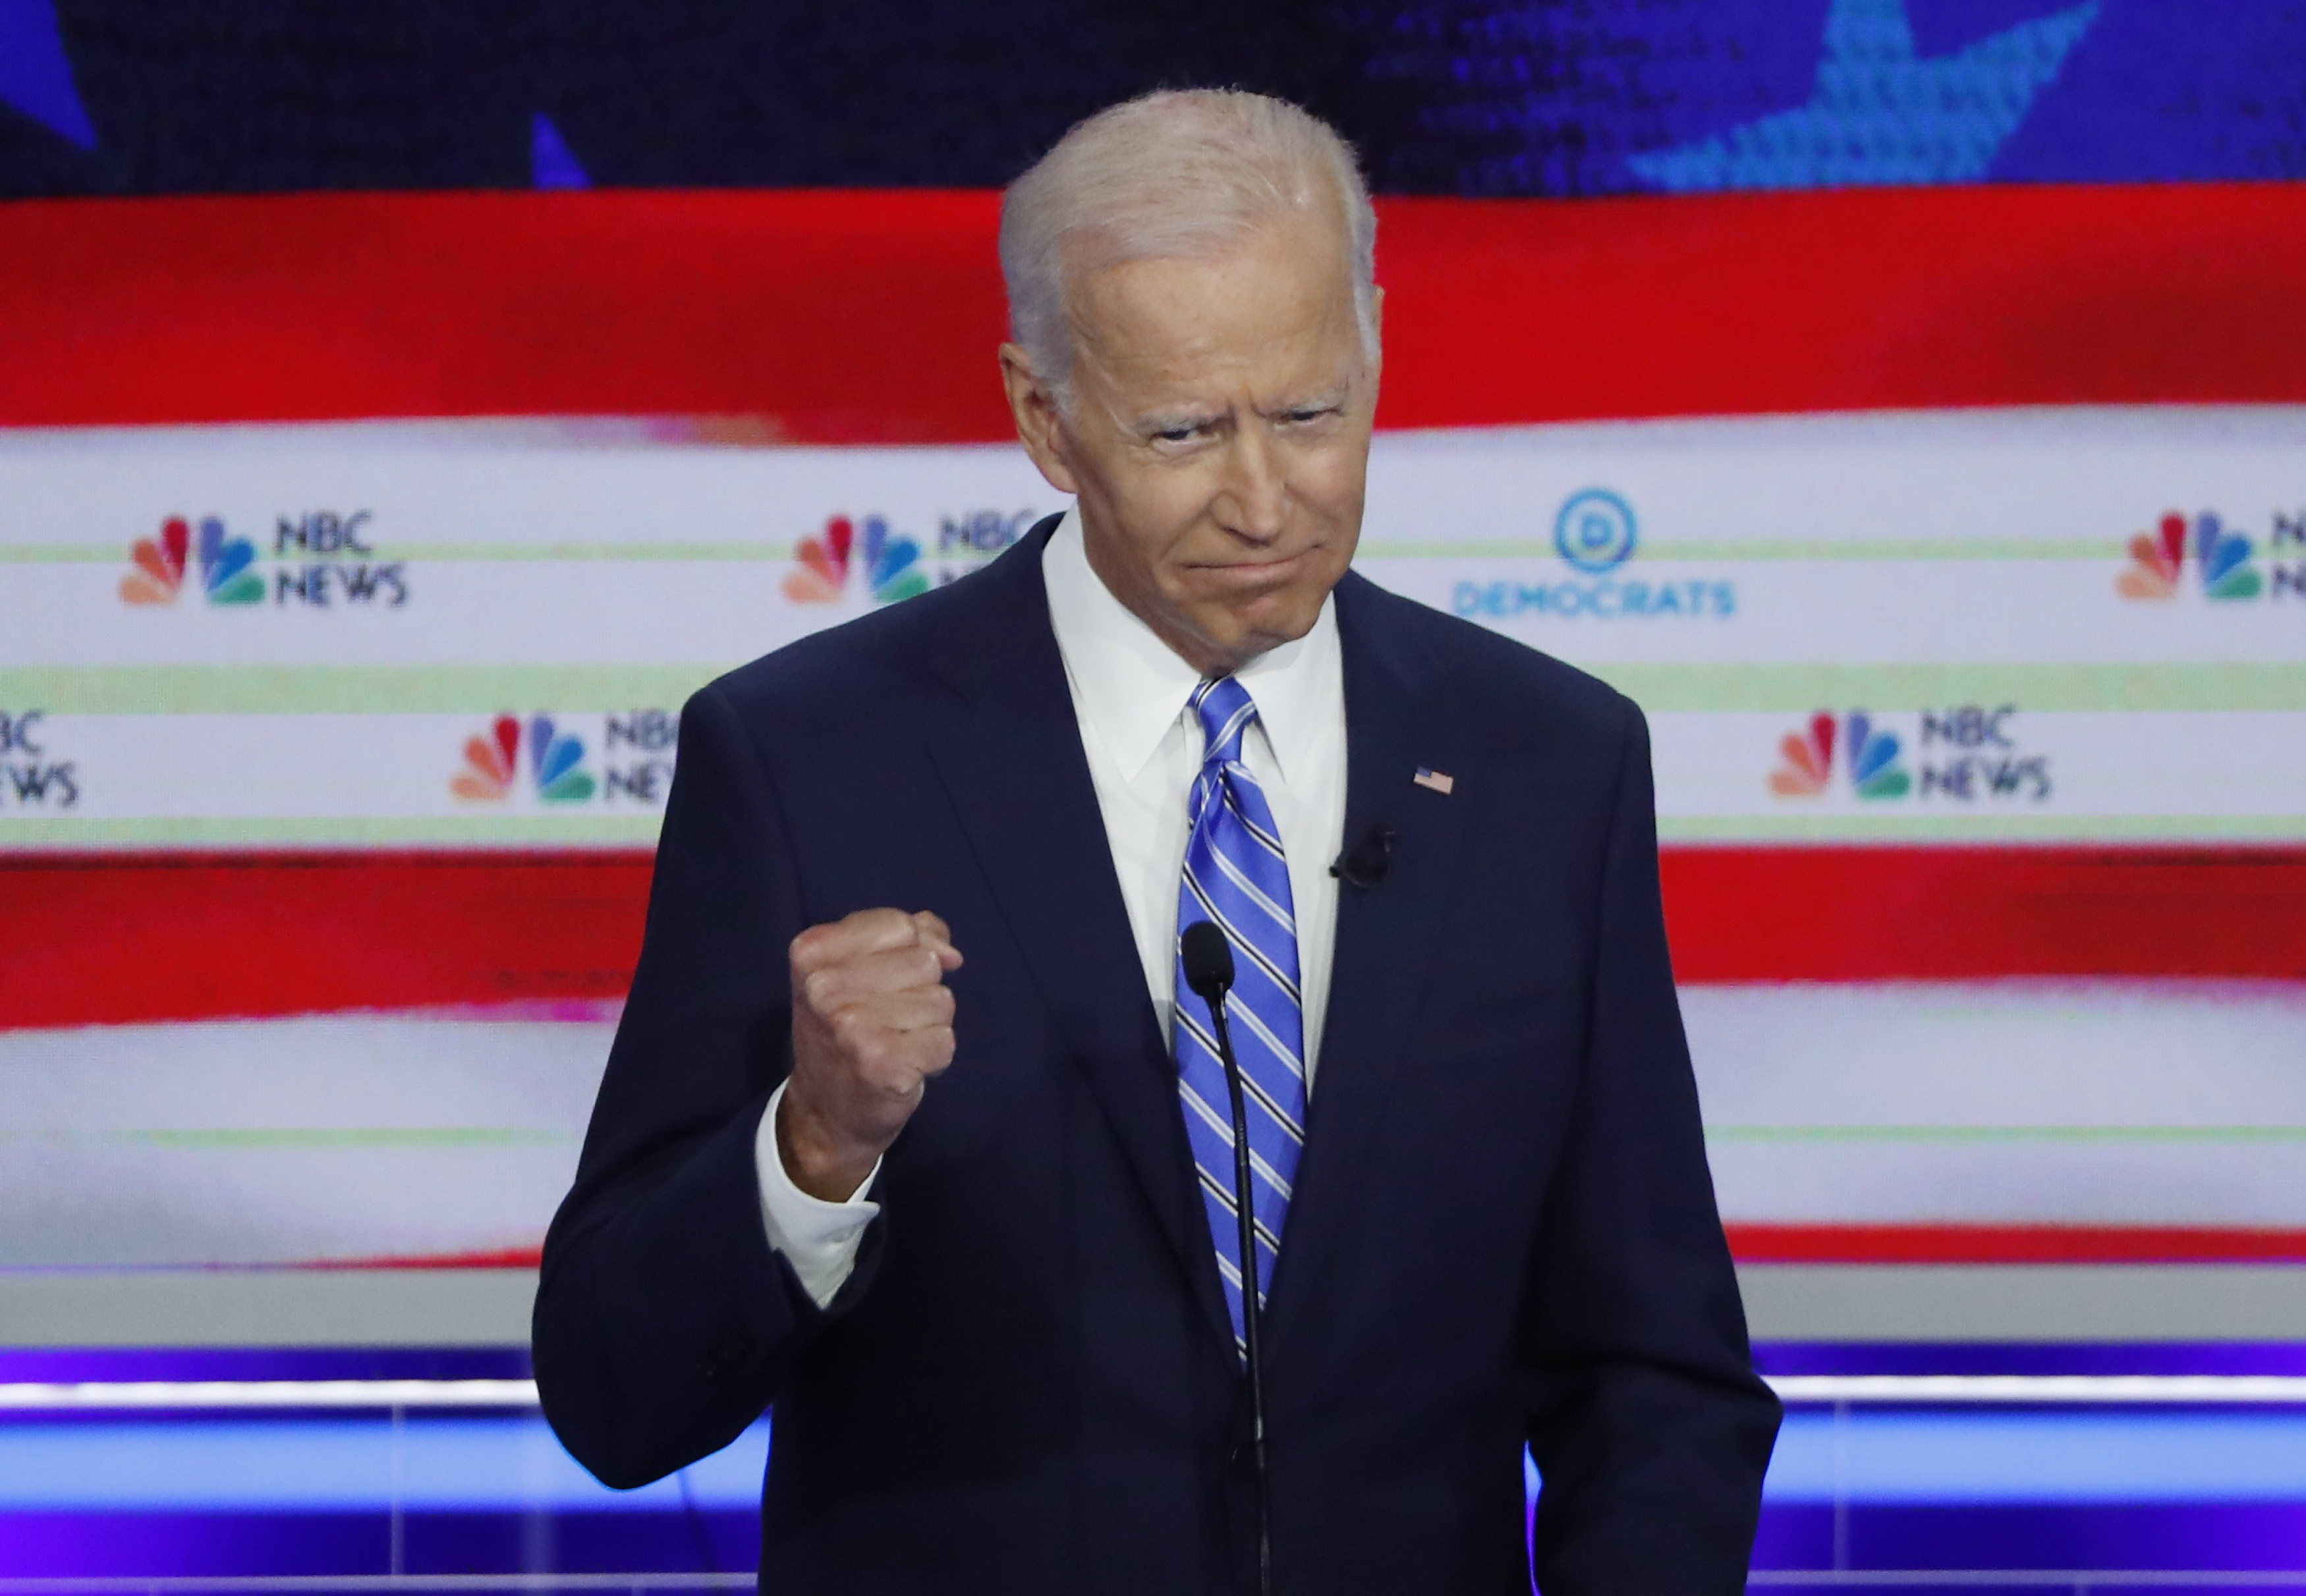 Former Vice President Joe Biden gestures during the second night of the first Democratic presidential candidates debate in Miami, Florida, U.S., June 27, 2019. REUTERS/Mike Segar